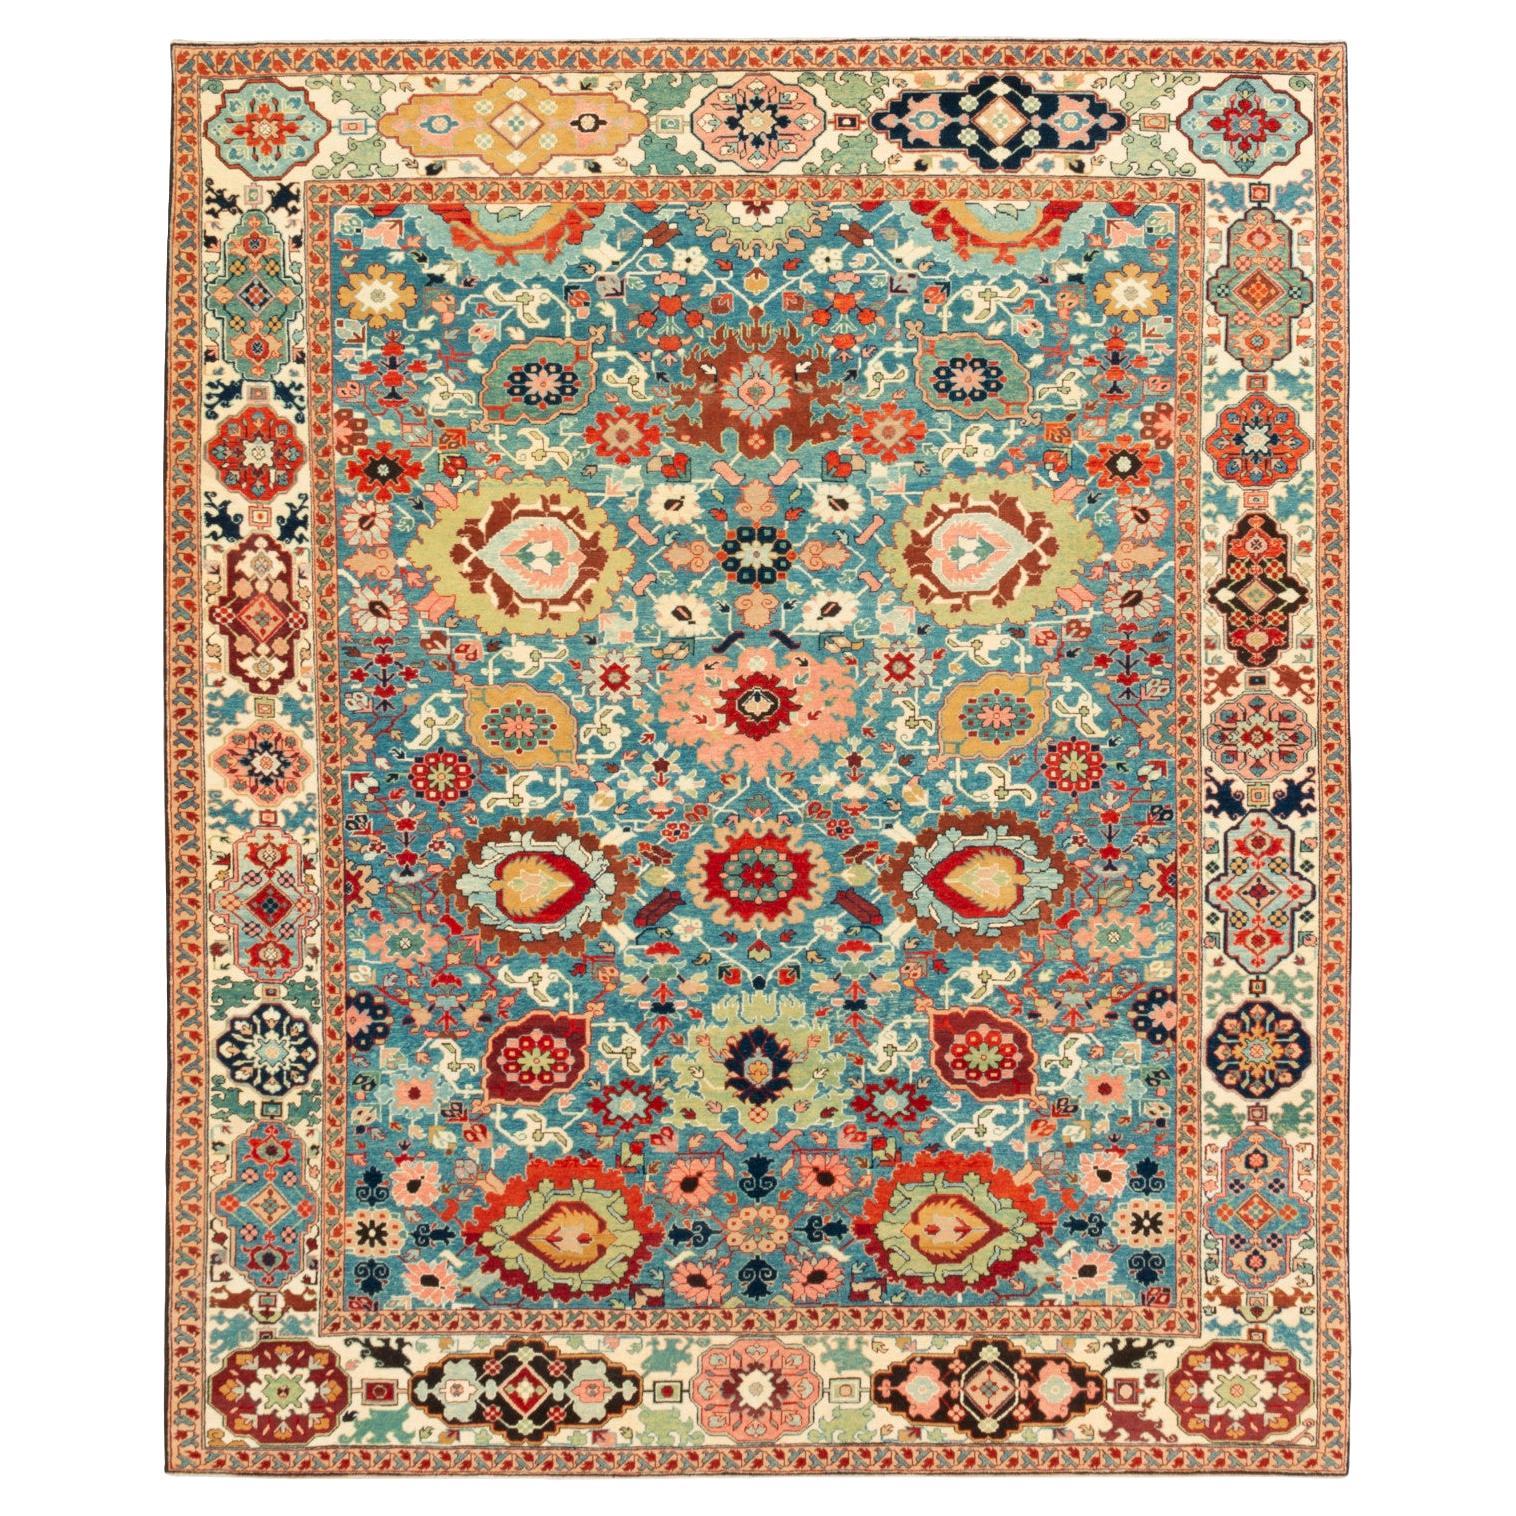 Ararat Teppich Palmette Gitterteppich - 19. Jahrhundert Revival Teppich - Naturfarben